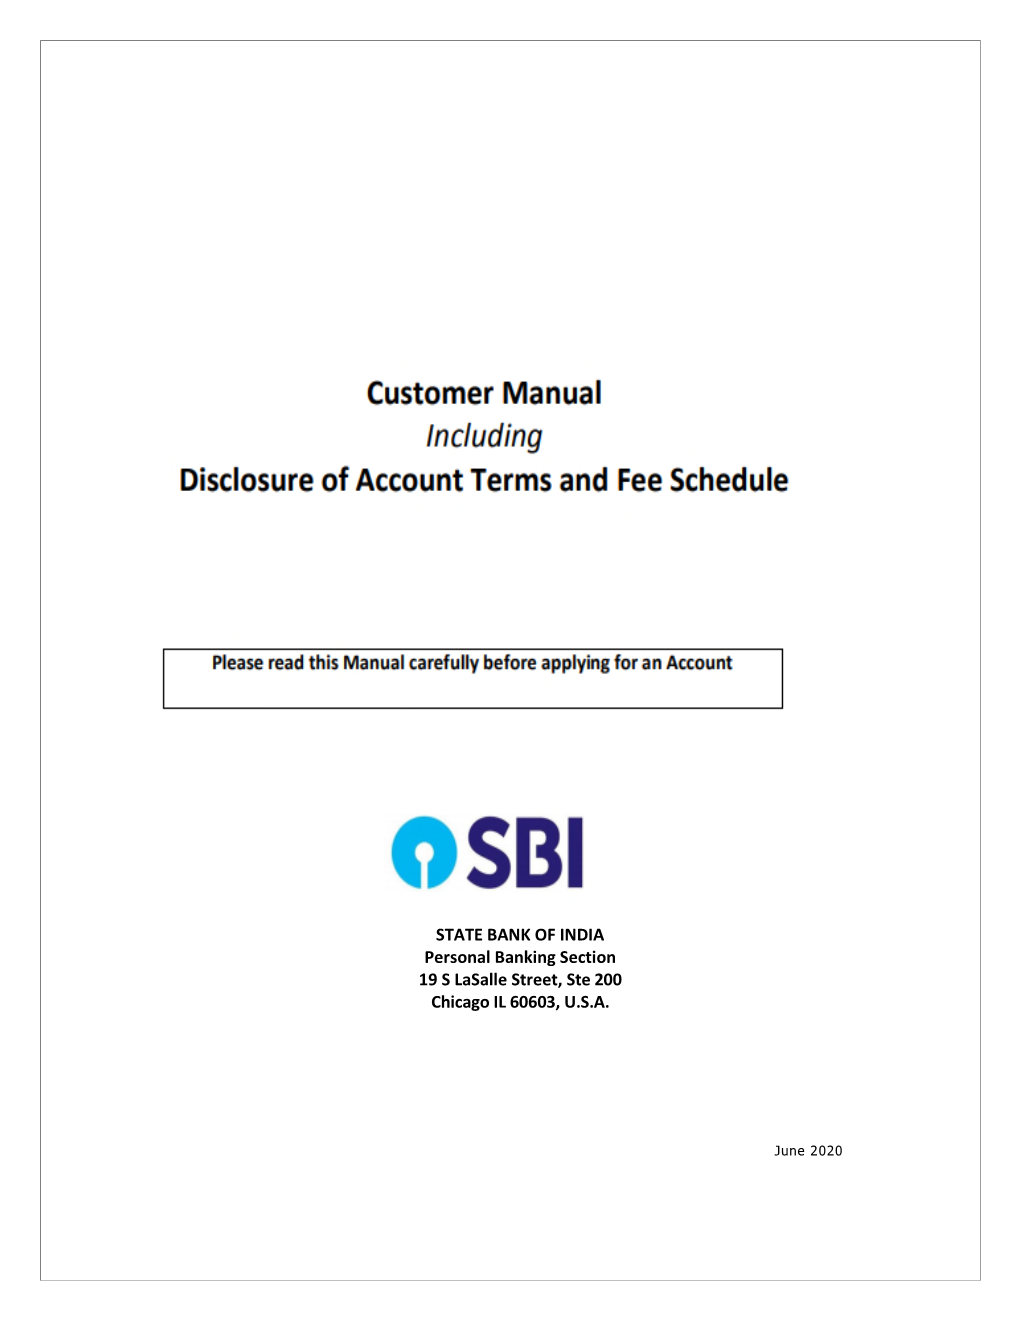 Customer Manual” to You